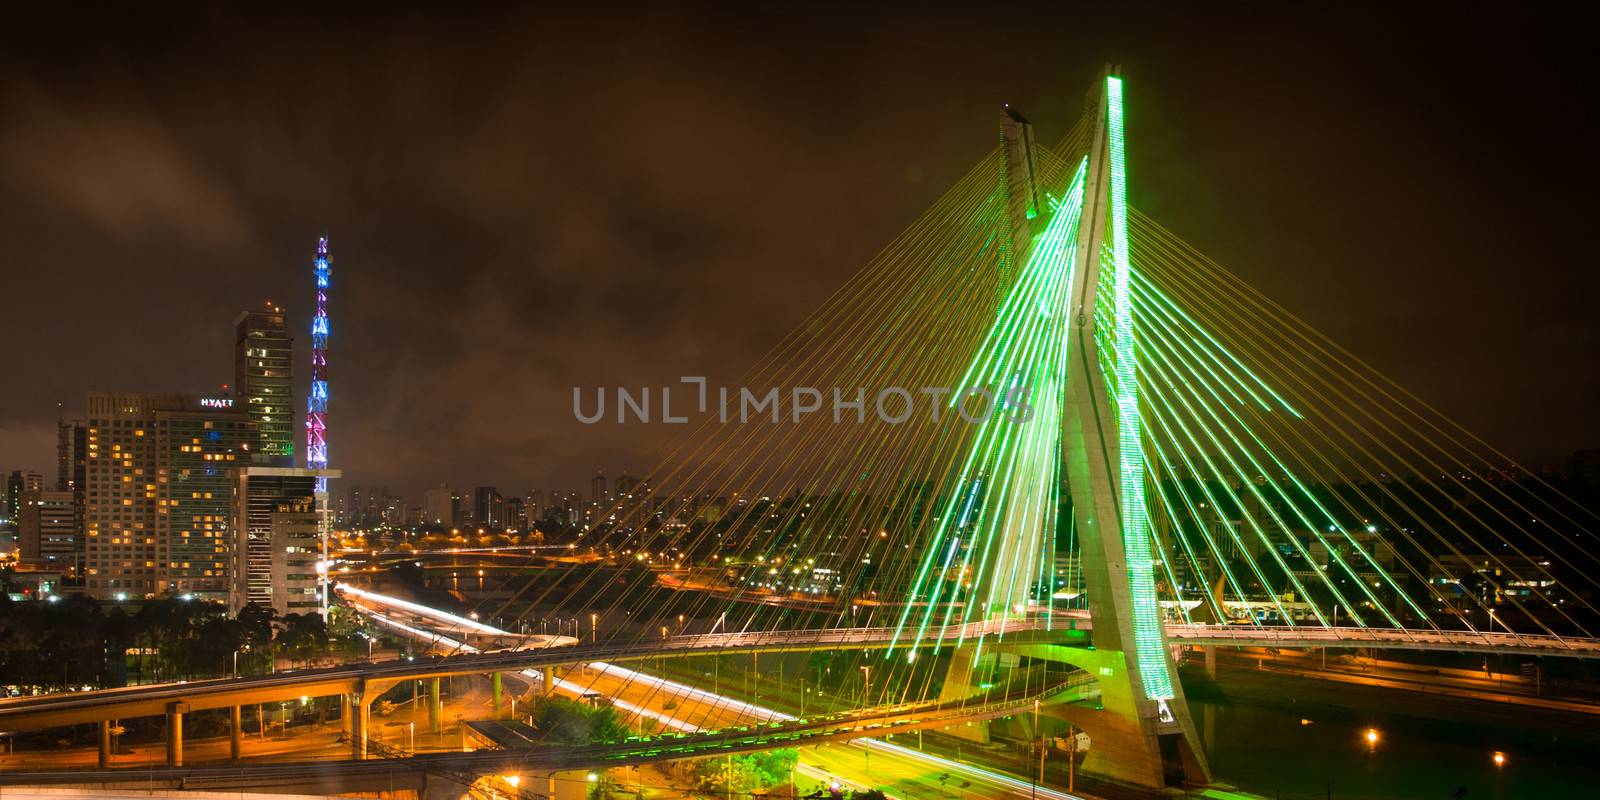 Scenic view of Octavio Frias de Oliveira bridge illuminated at night over Pinheiros river in Sao Paulo, Brazil.